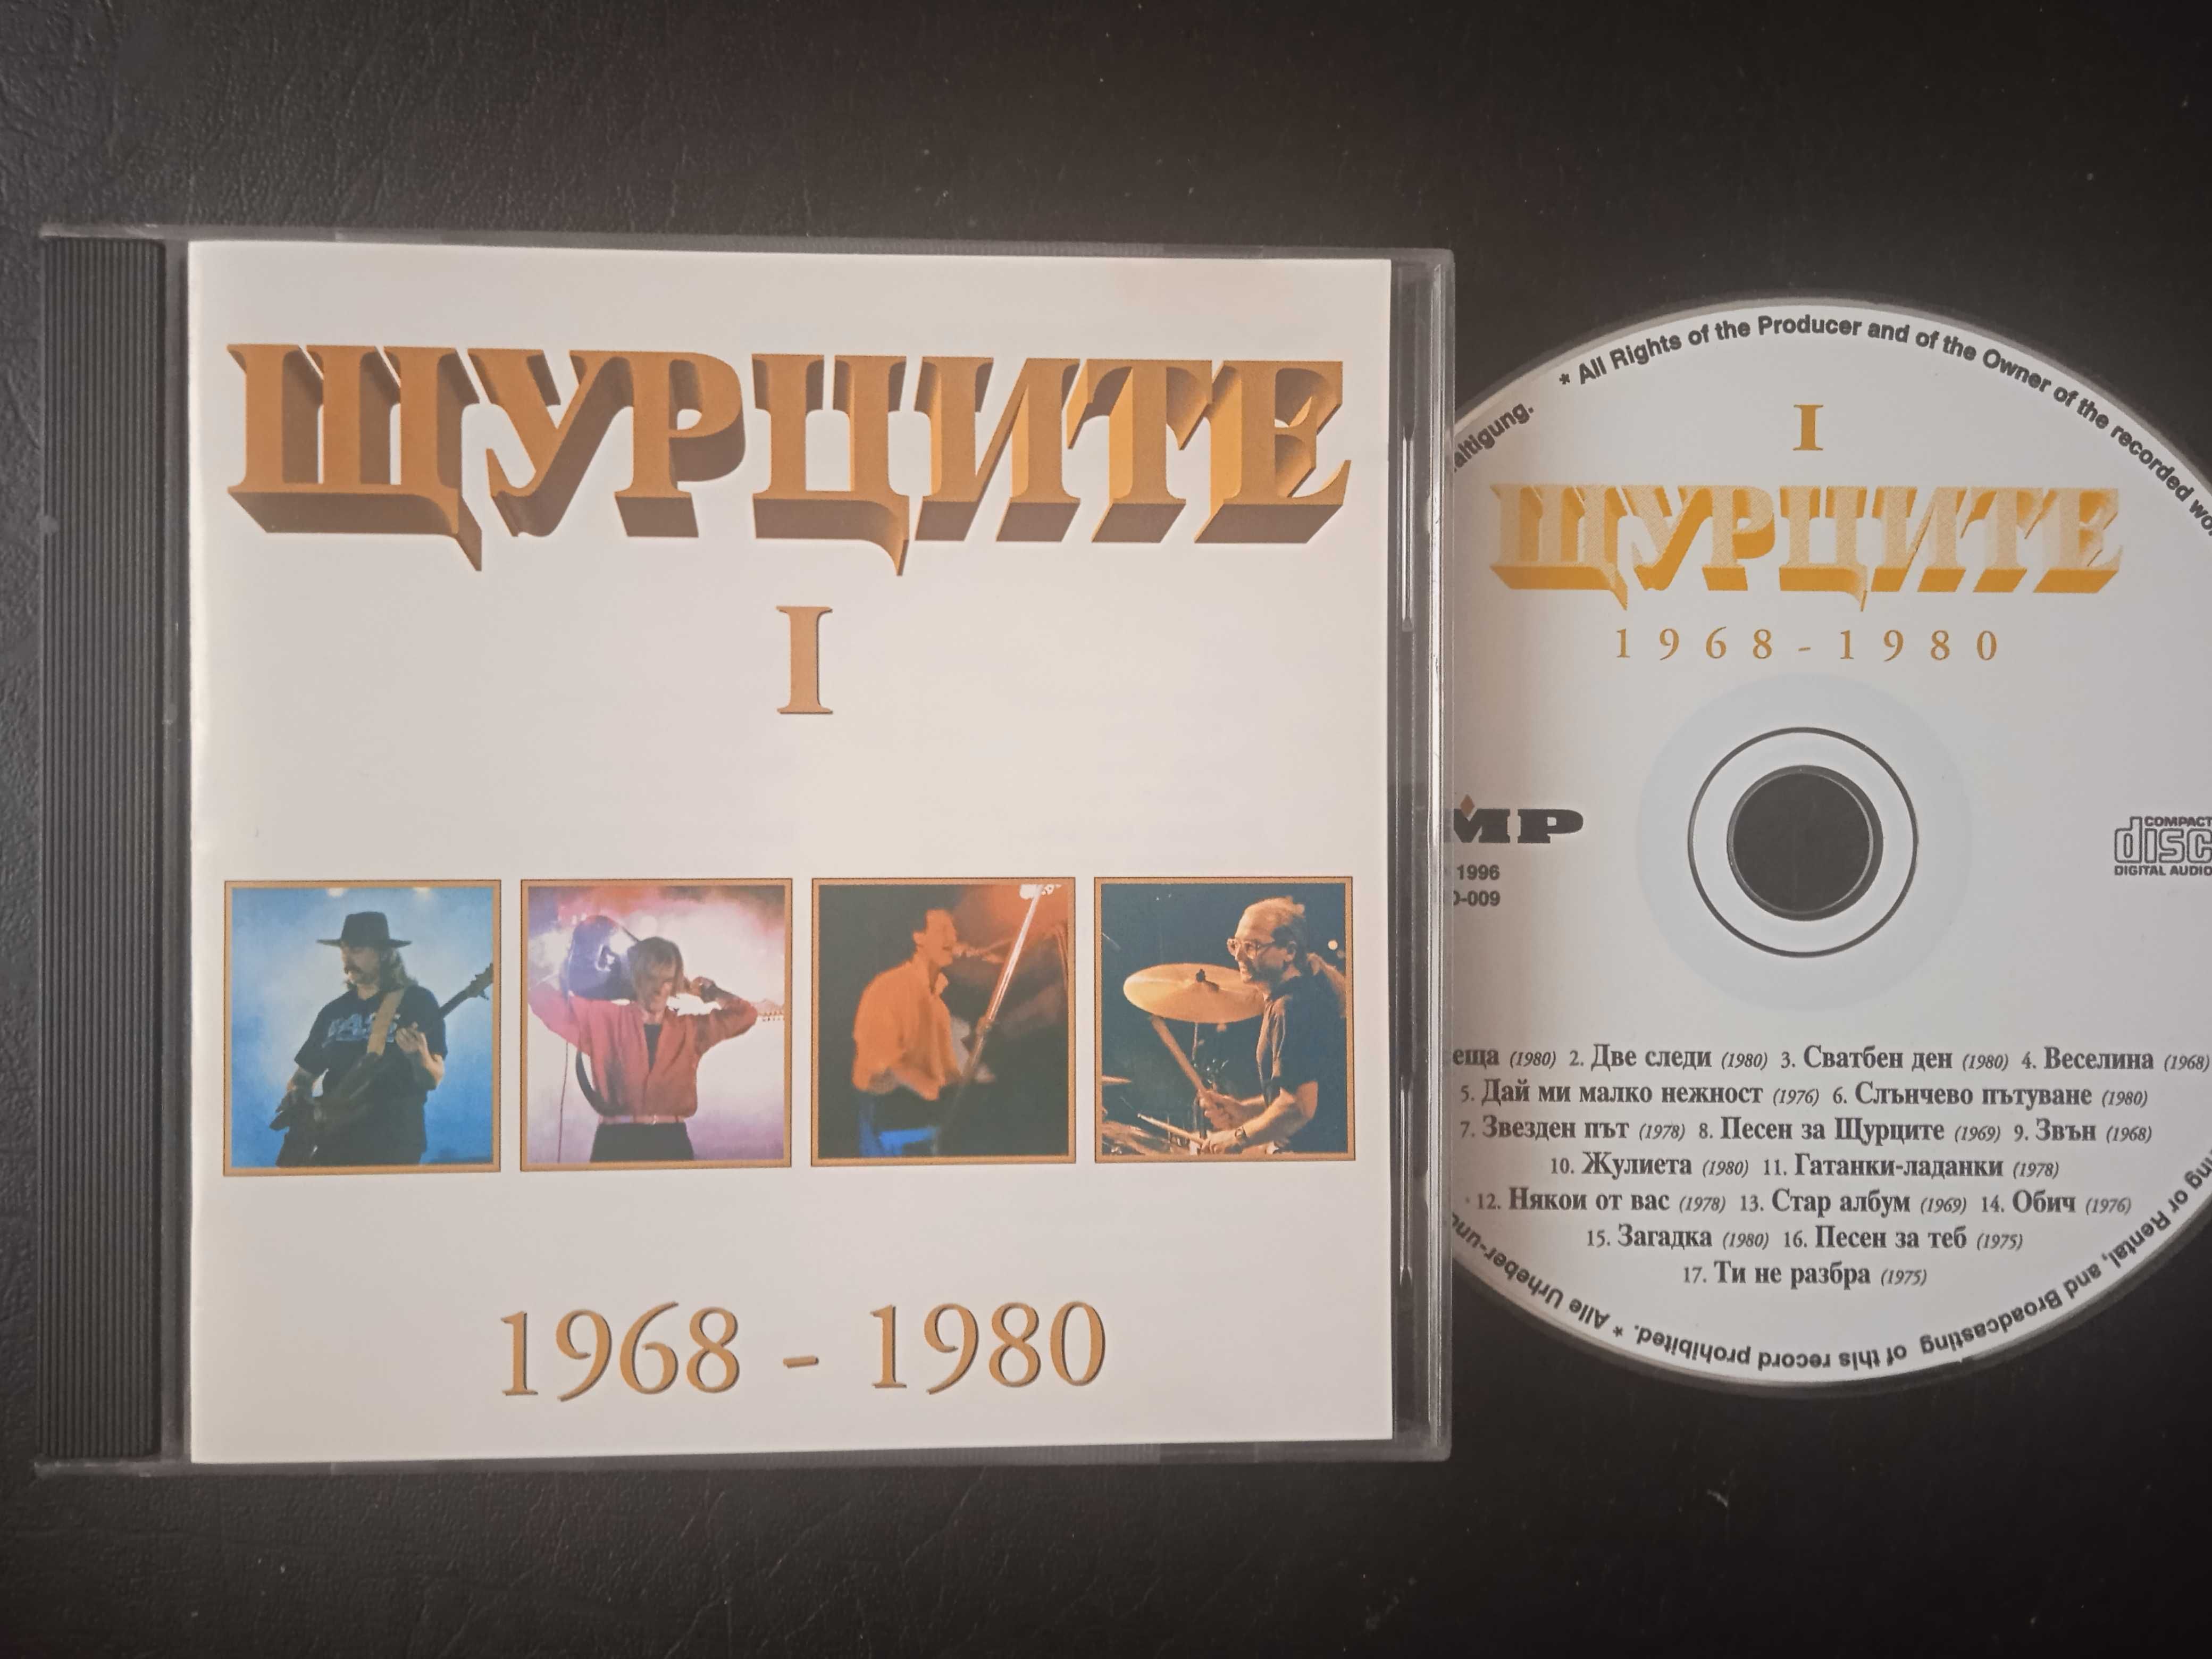 ЩУРЦИТЕ - избрани хитови песни на групата 1968-1980г. (БГ РОК)